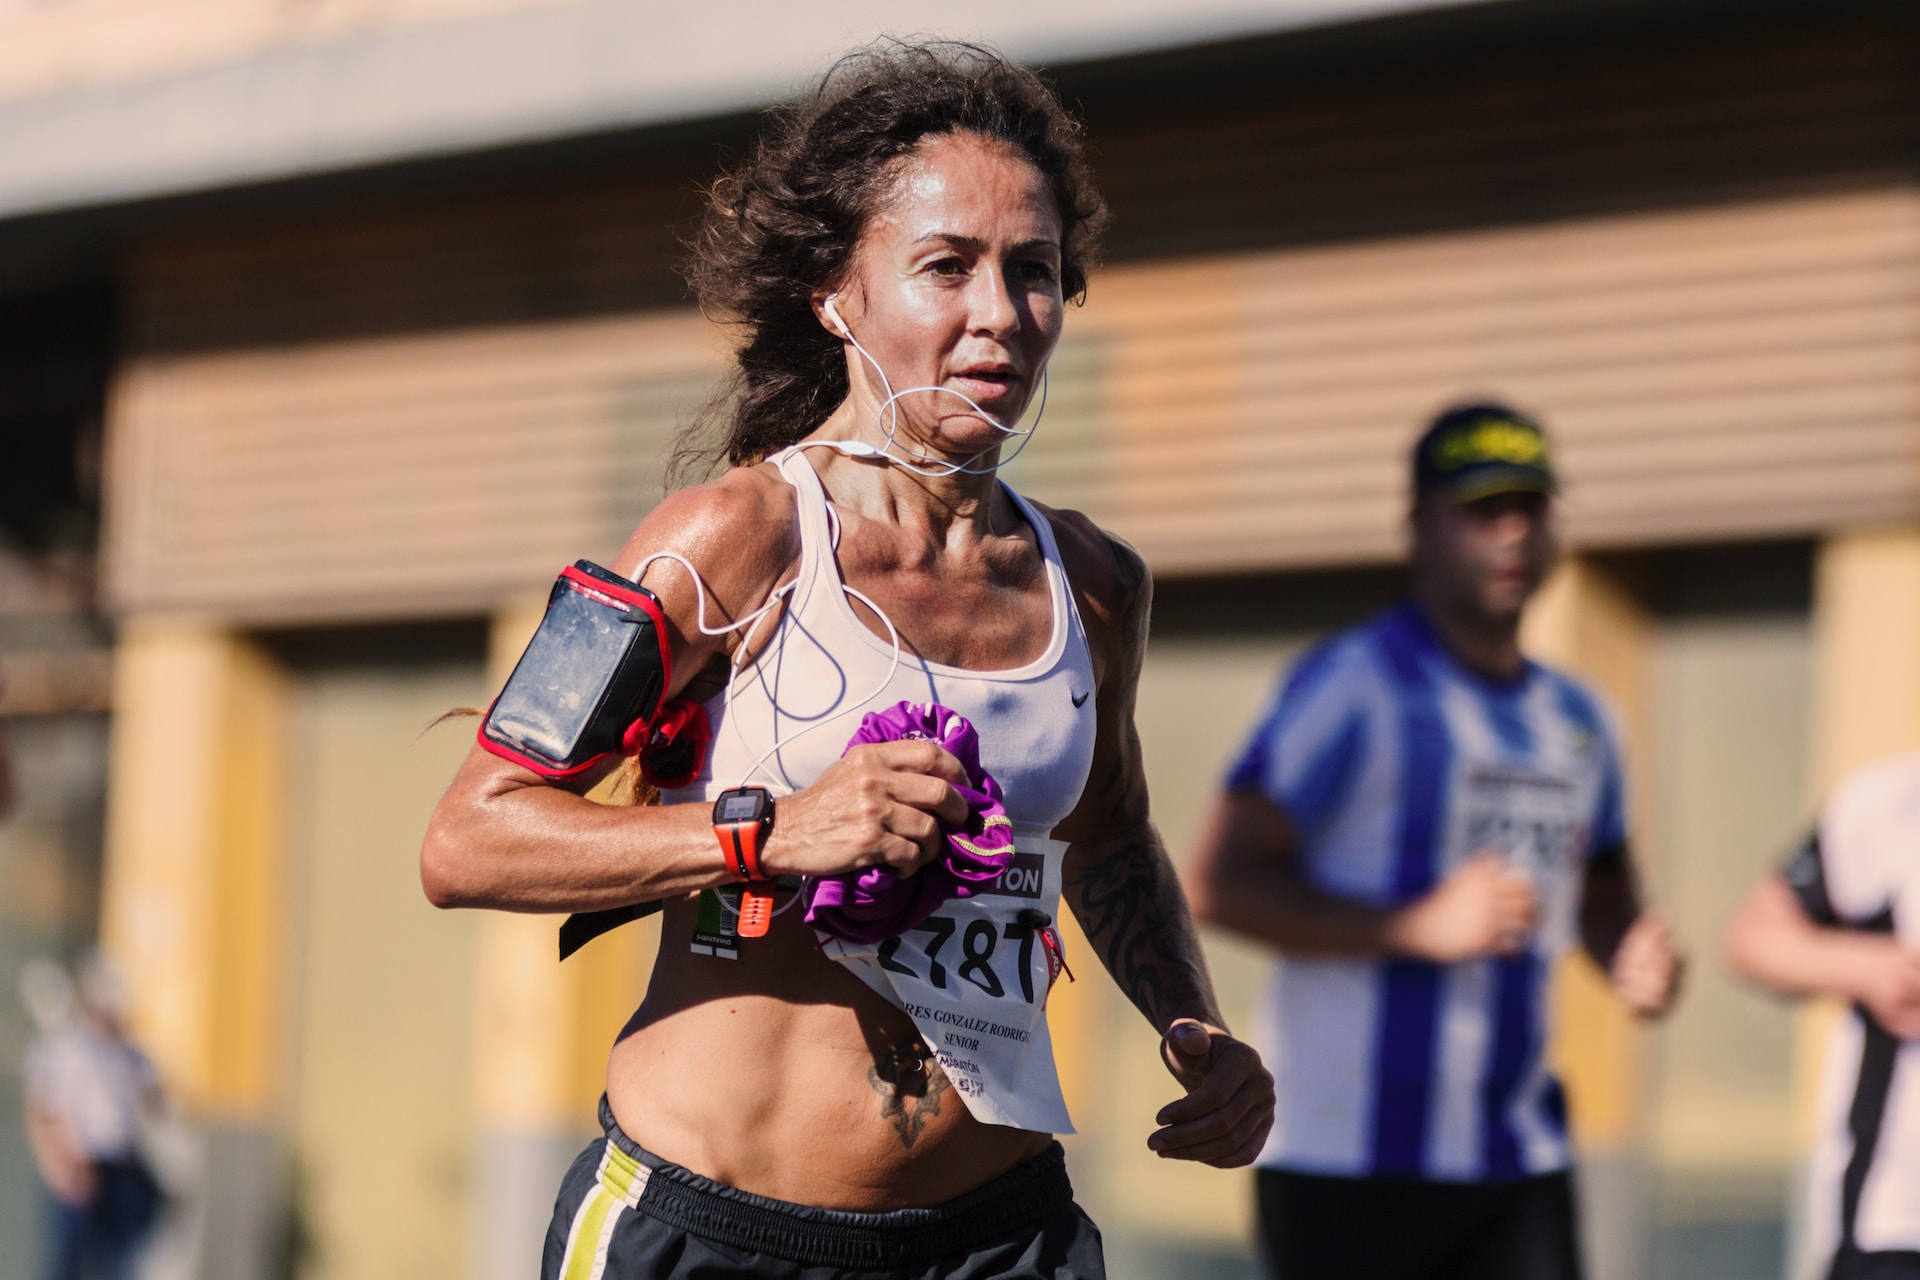 the image shows a woman running on the triathlon marathon